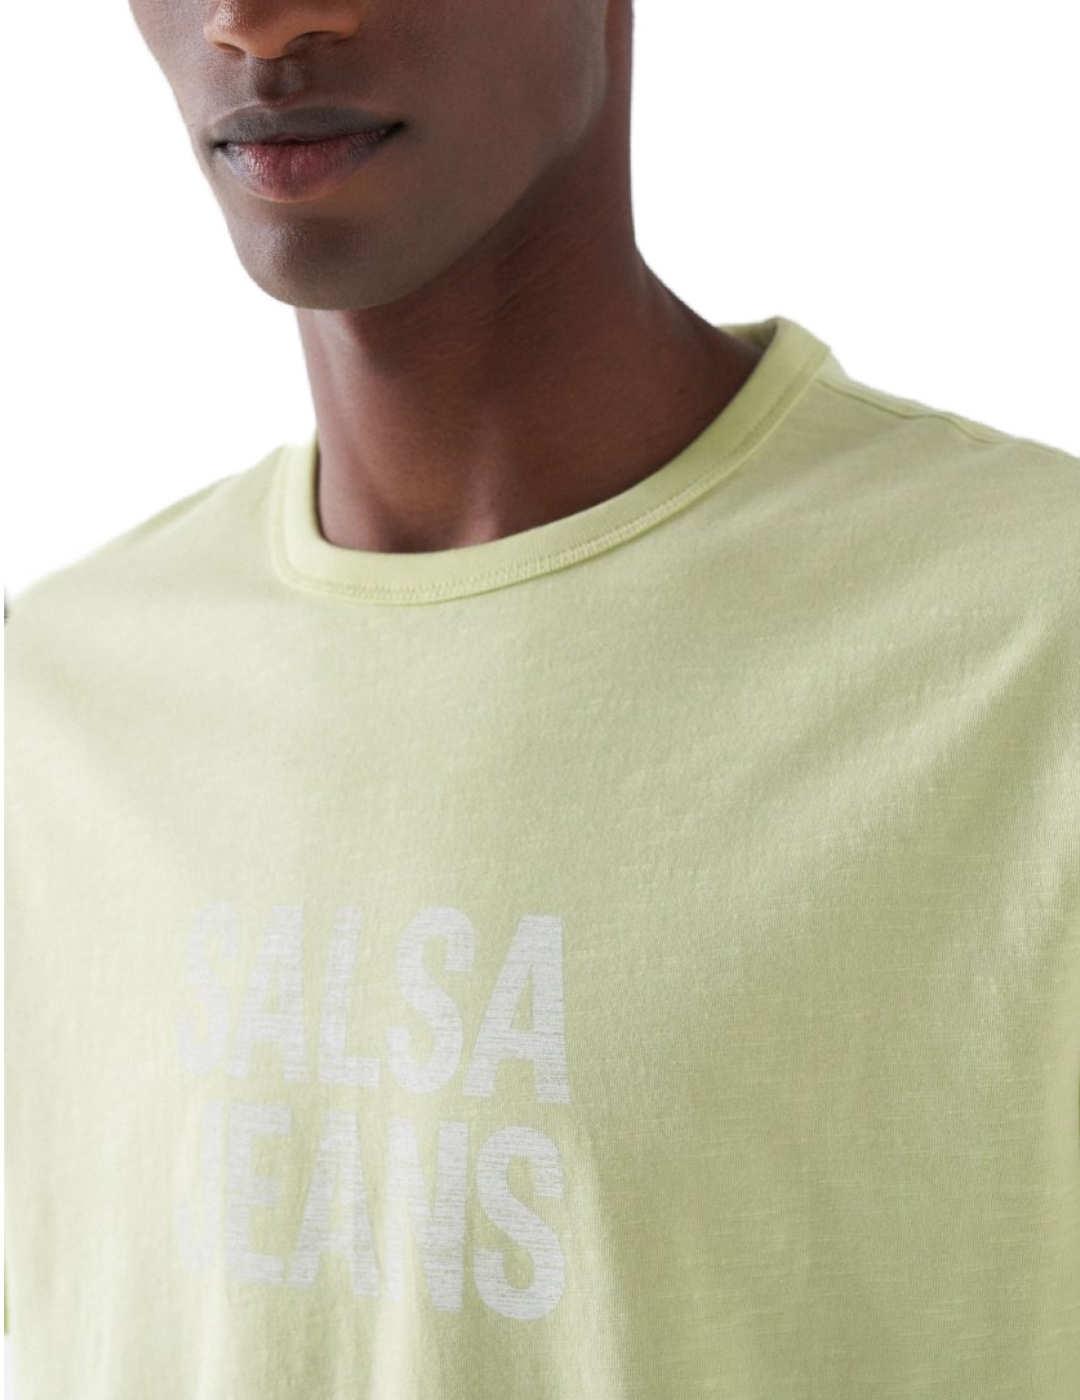 Camiseta Salsa lima logo blanco manga corta para hombre